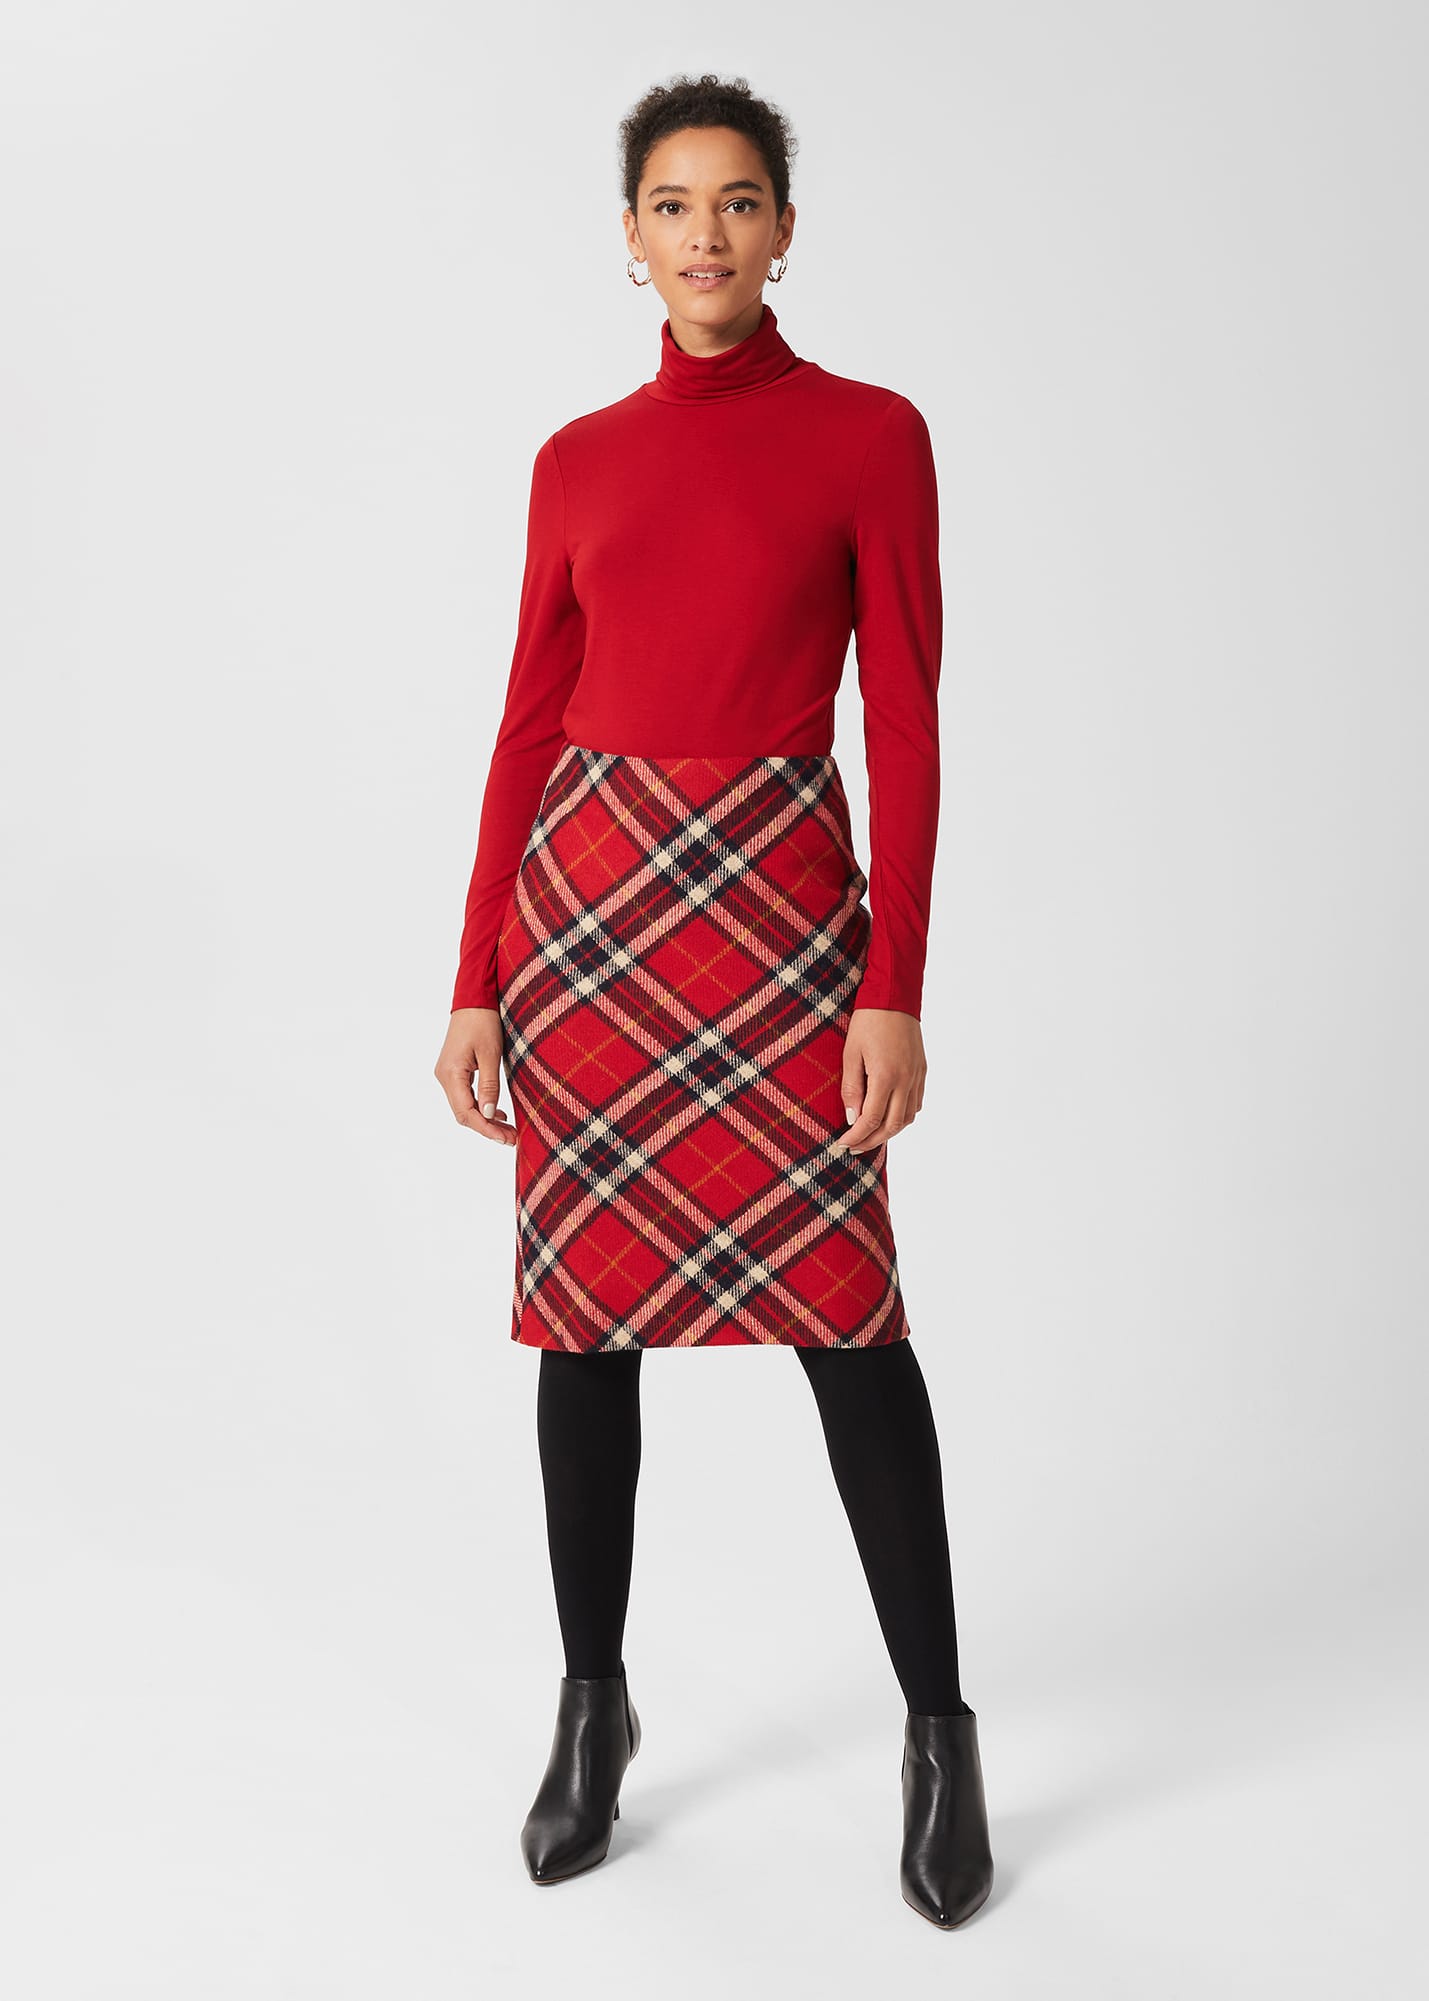 Hobbs Women's Sariah Pencil Skirt - Red Multi